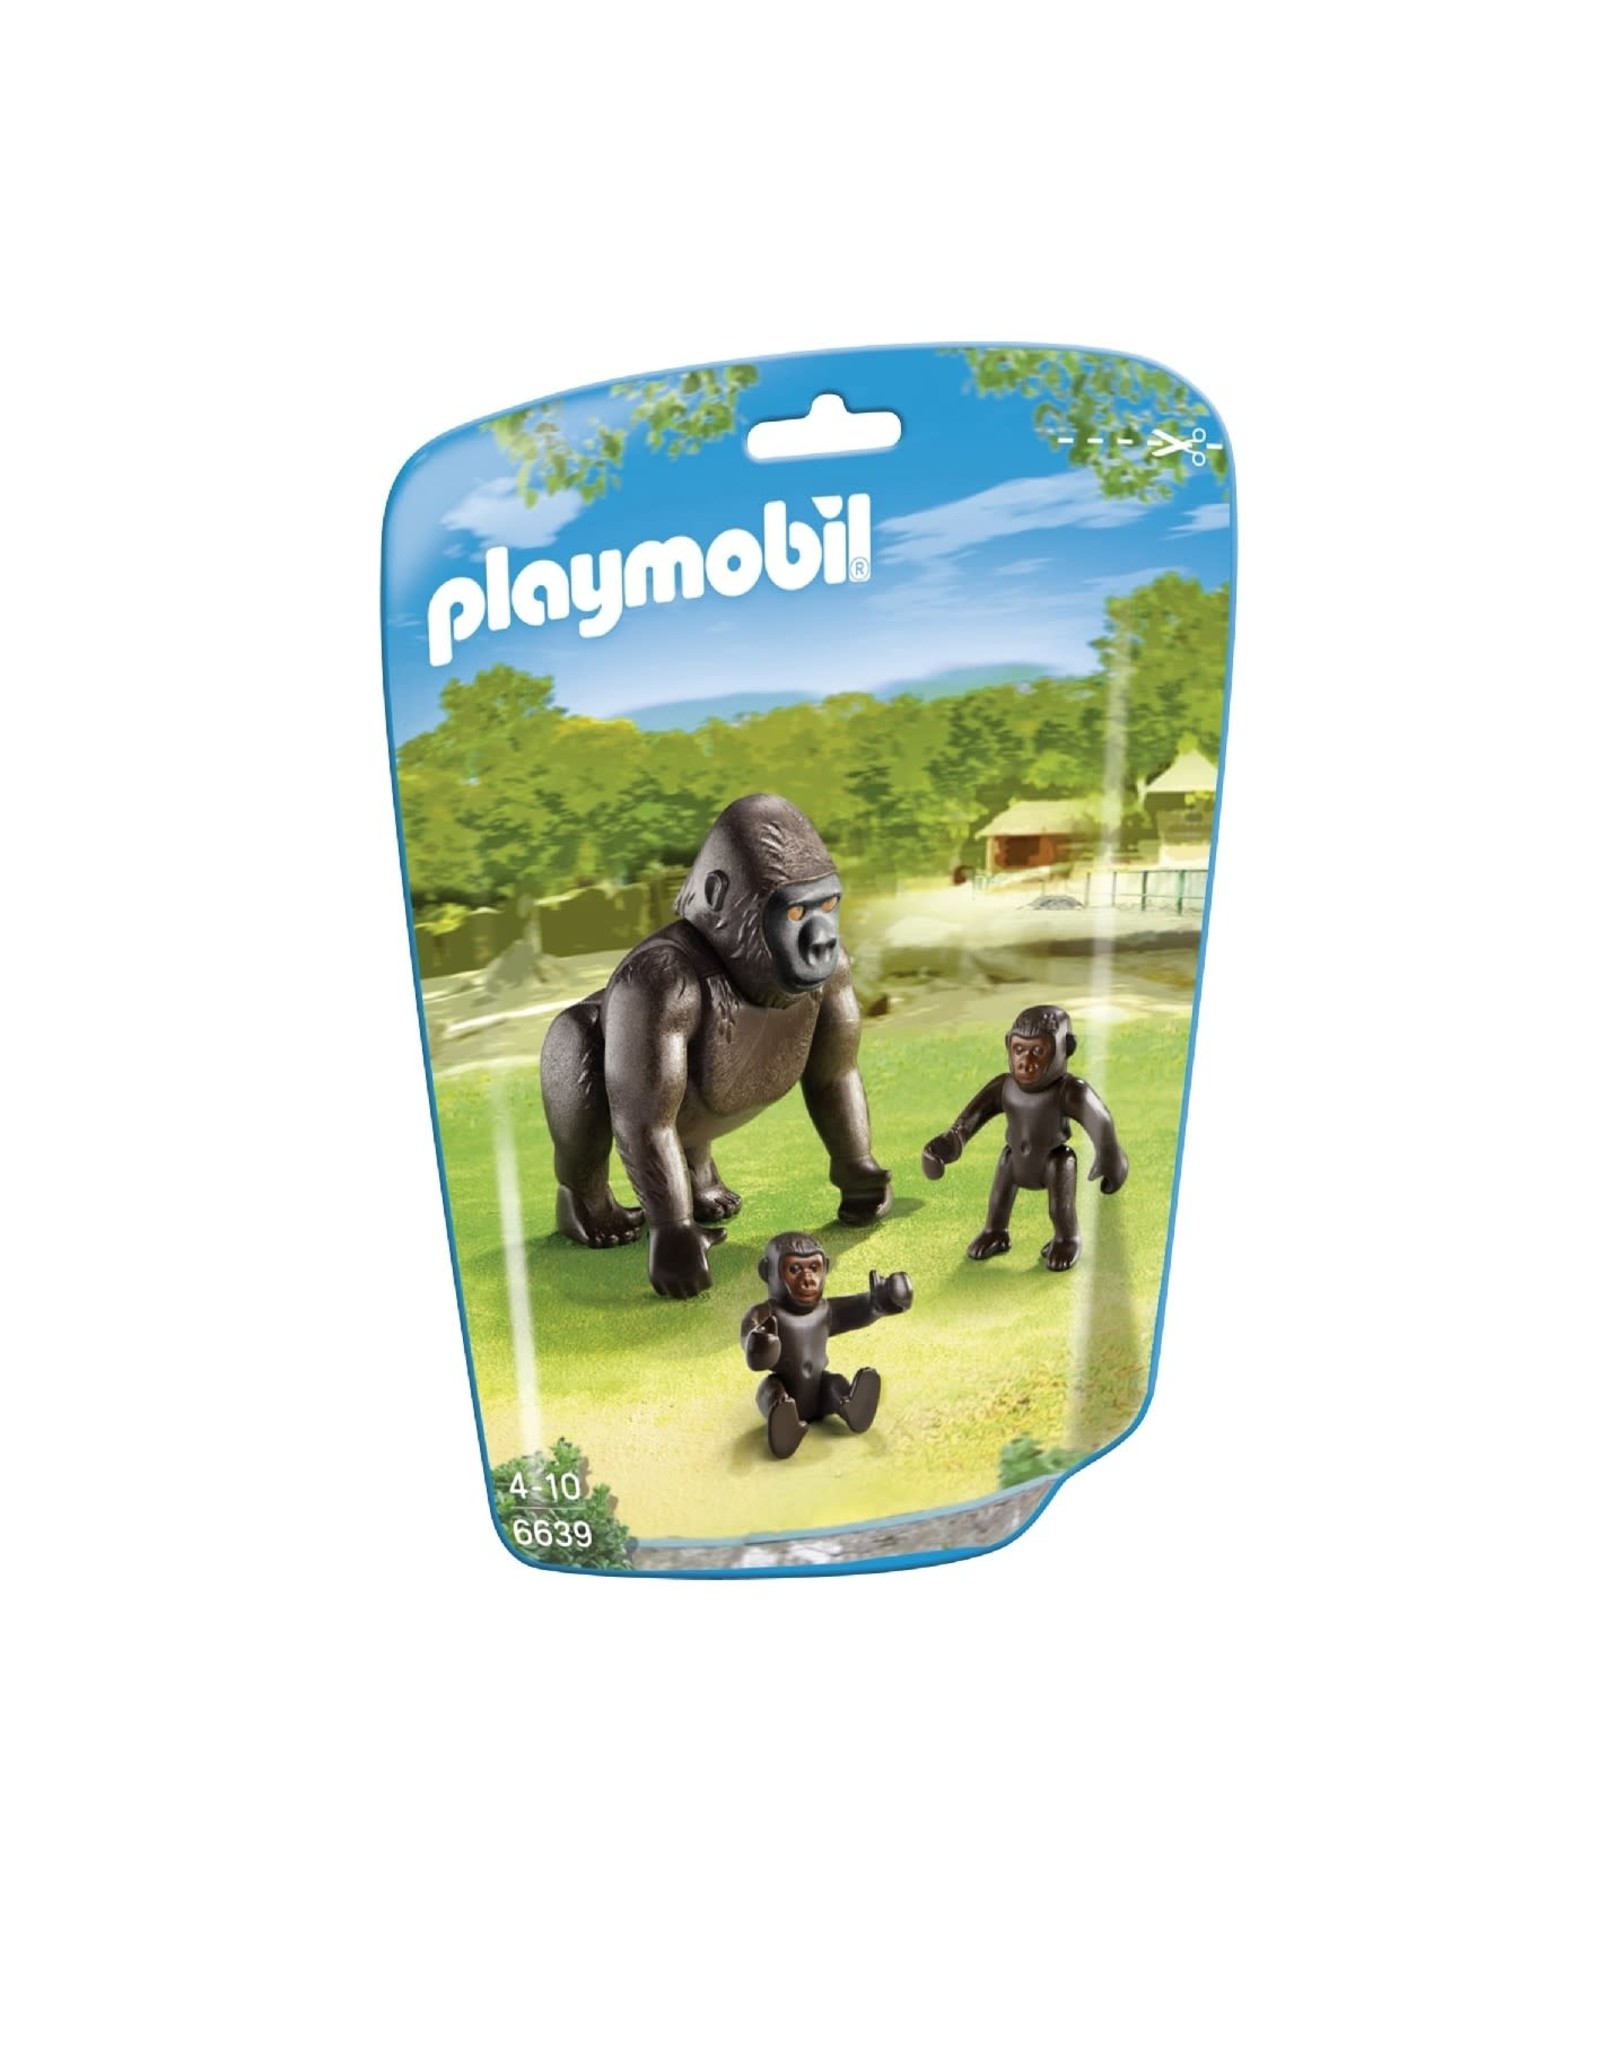 Playmobil Playmobil 6639 Gorilla met Baby's